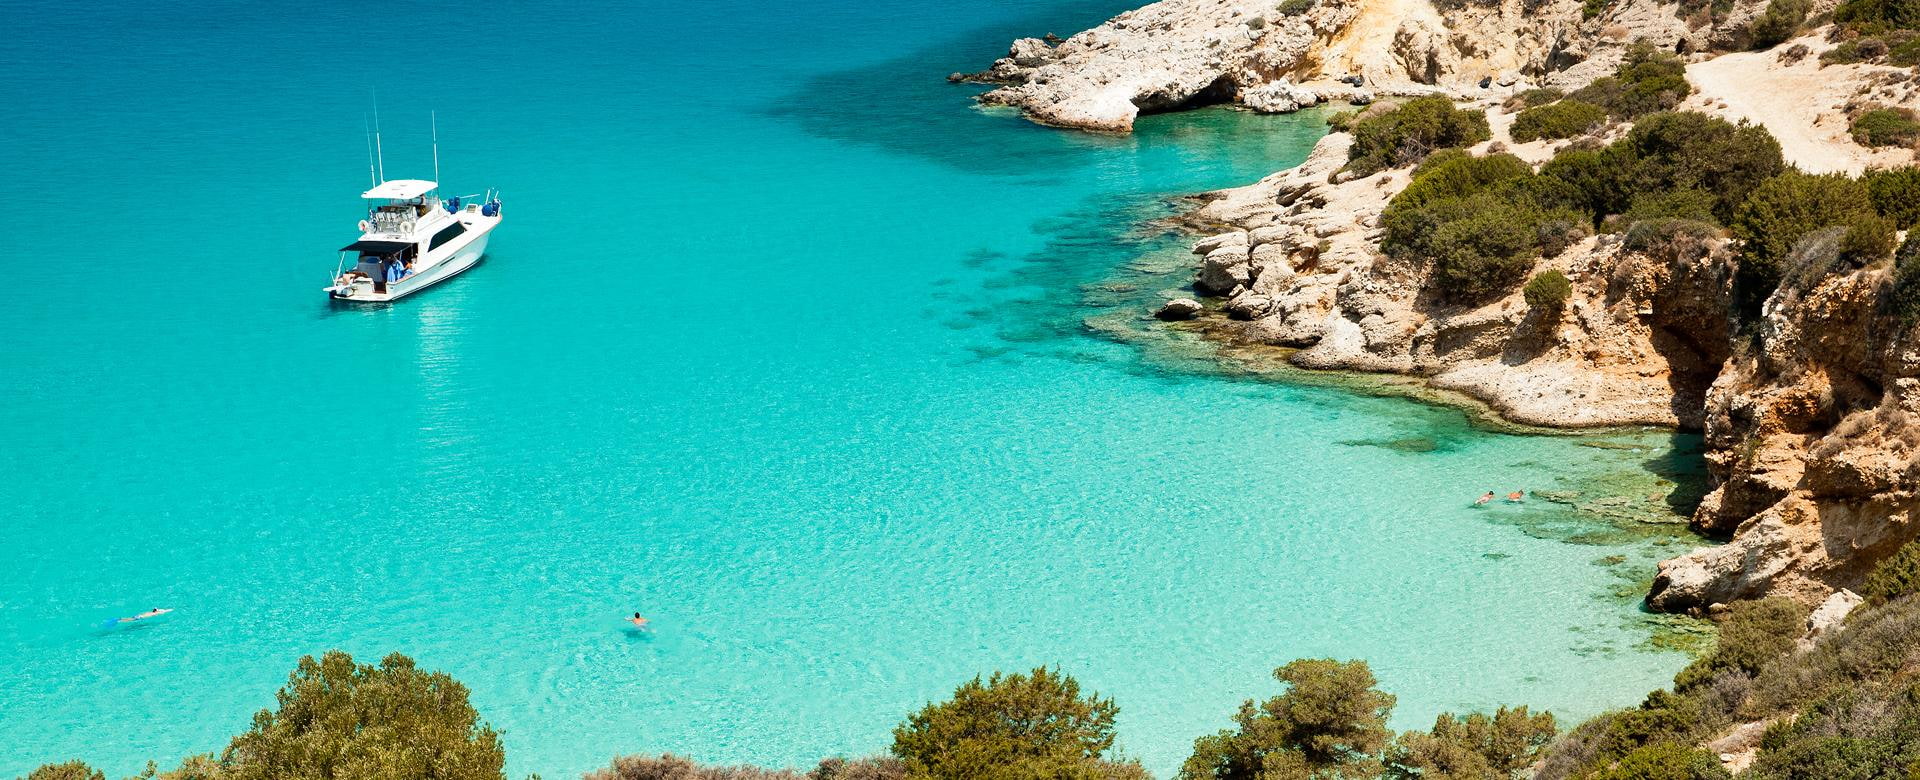 Griechenland Kreta Strand